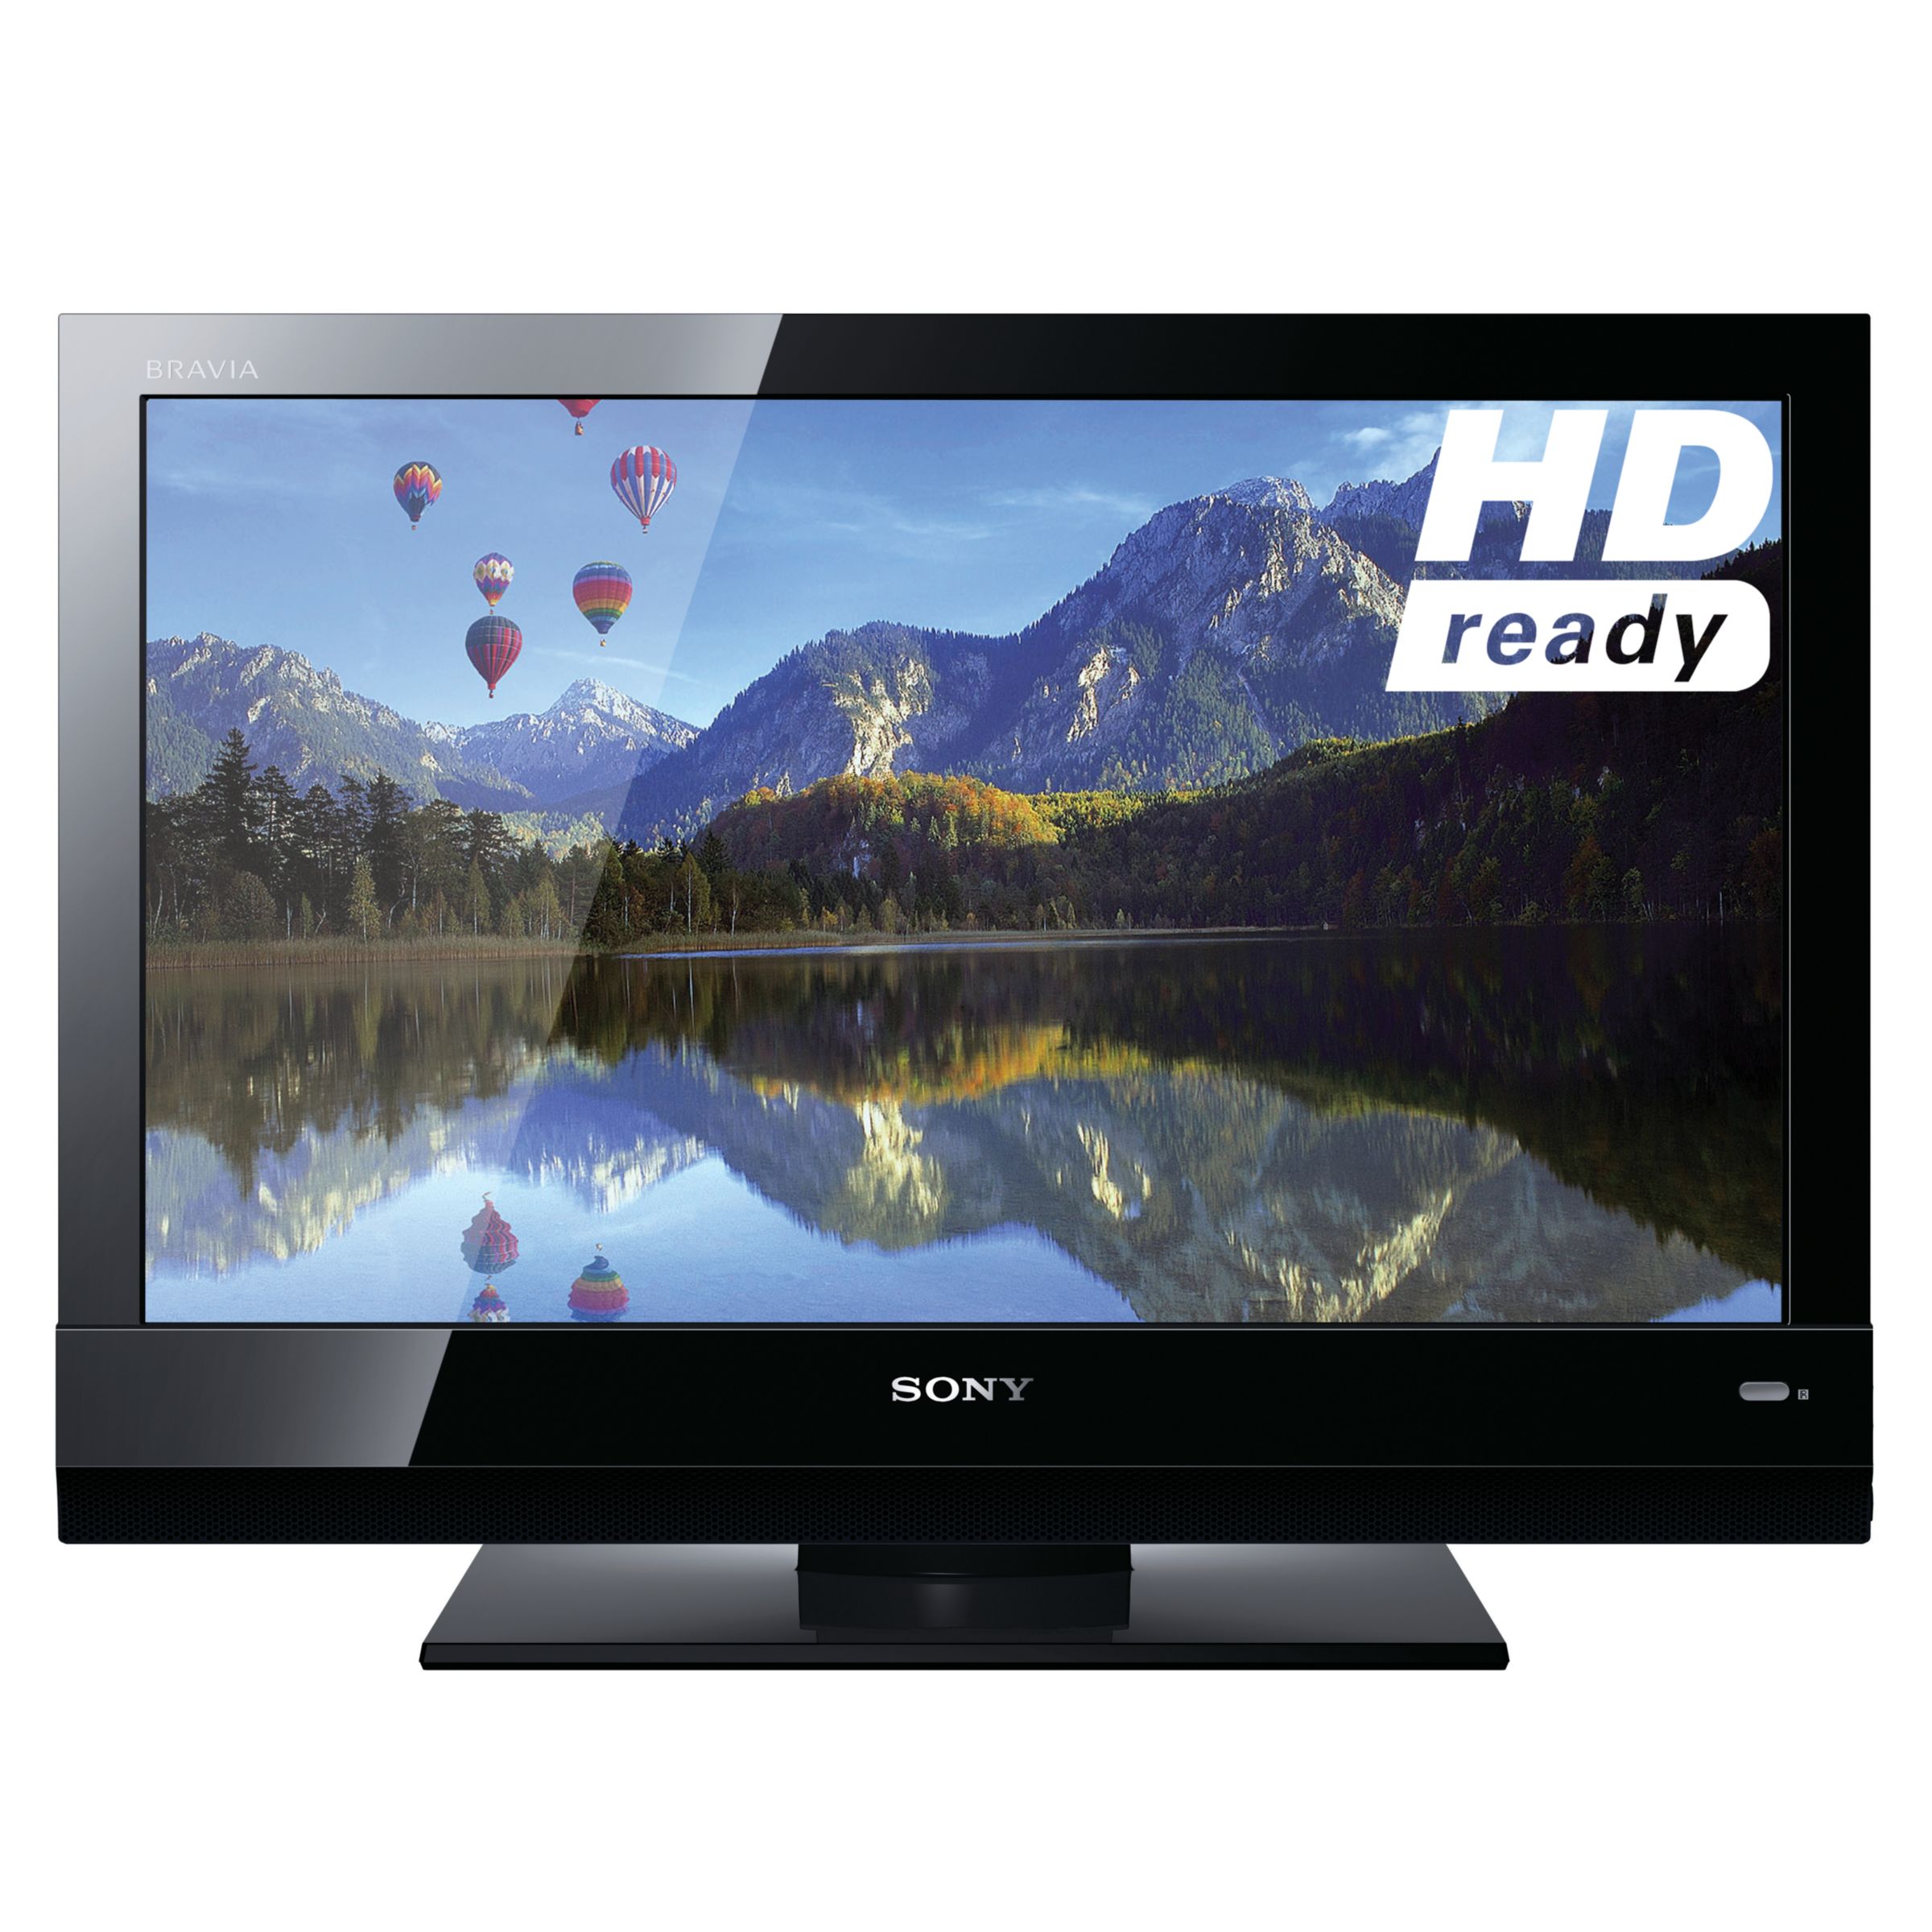 Sony Bravia KDL-19BX200BU LCD HD Ready Digital Television, 19 Inch at John Lewis